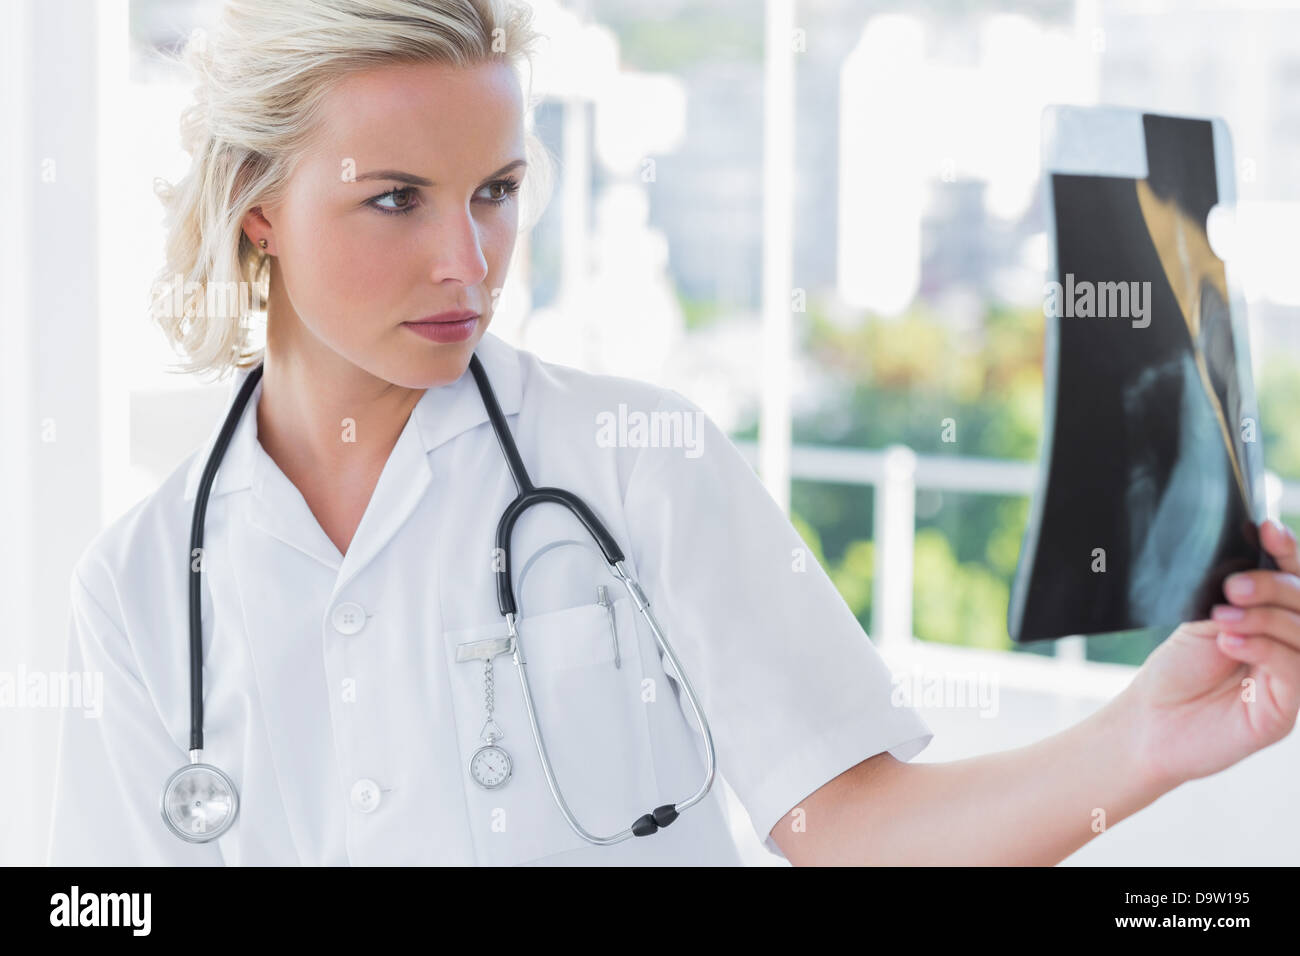 Nurse holding a radiography Stock Photo